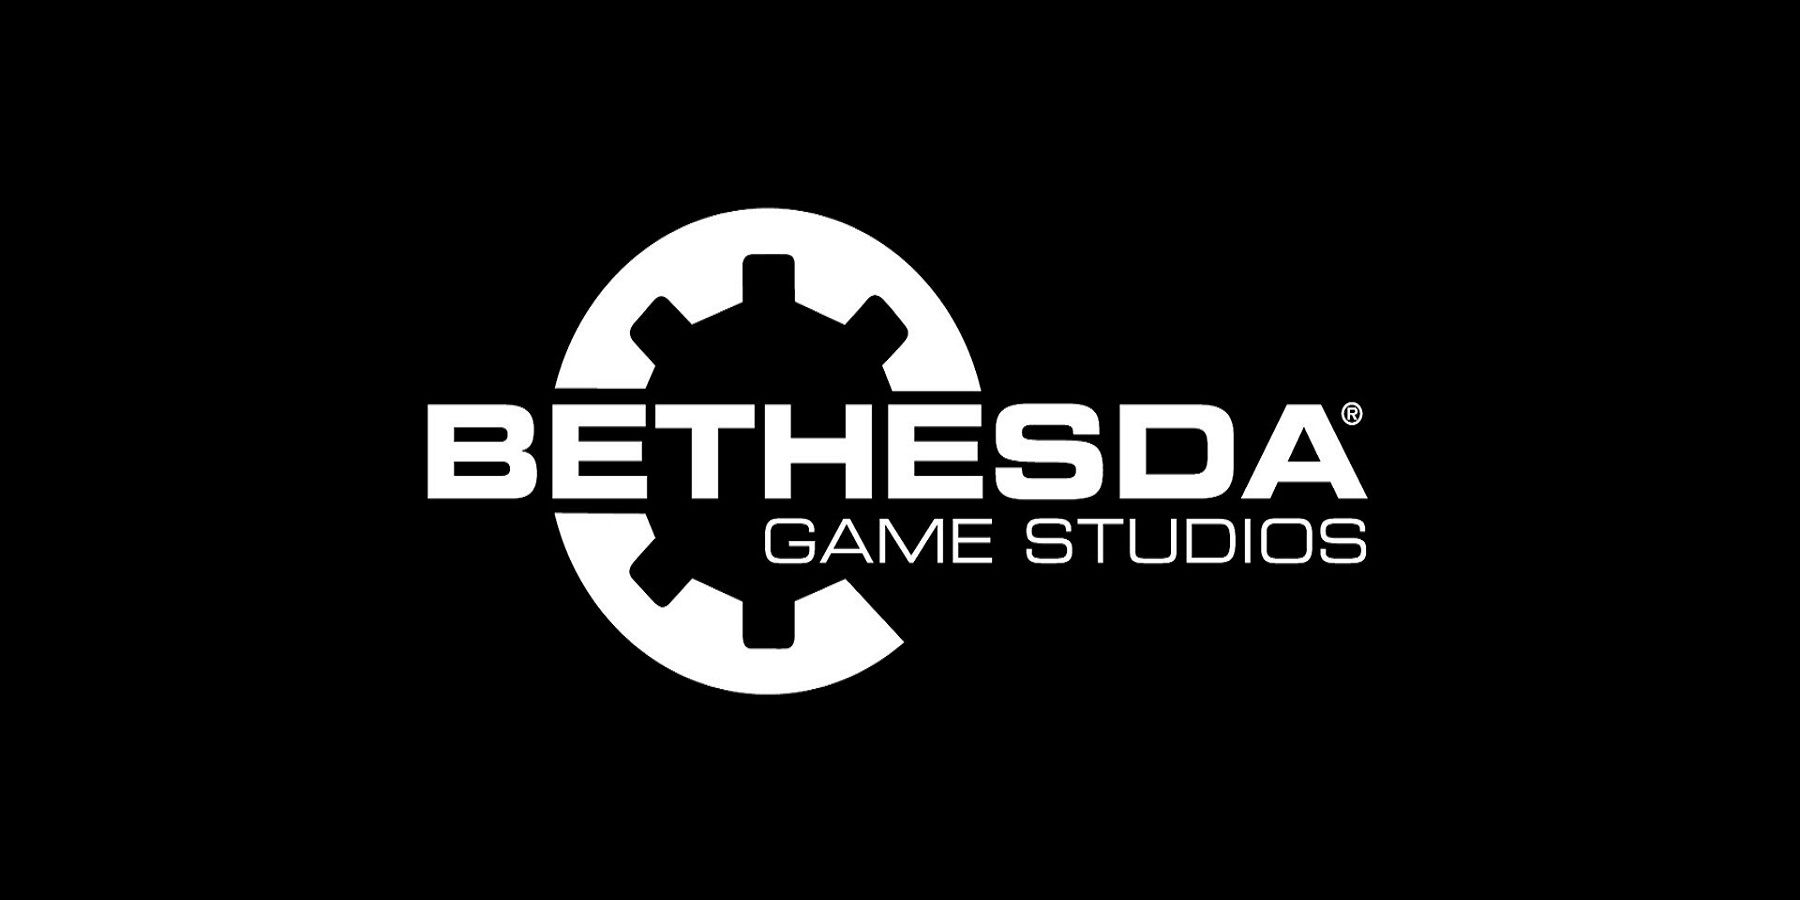 Image showing the Bethesda Game Studios logo on a black background.